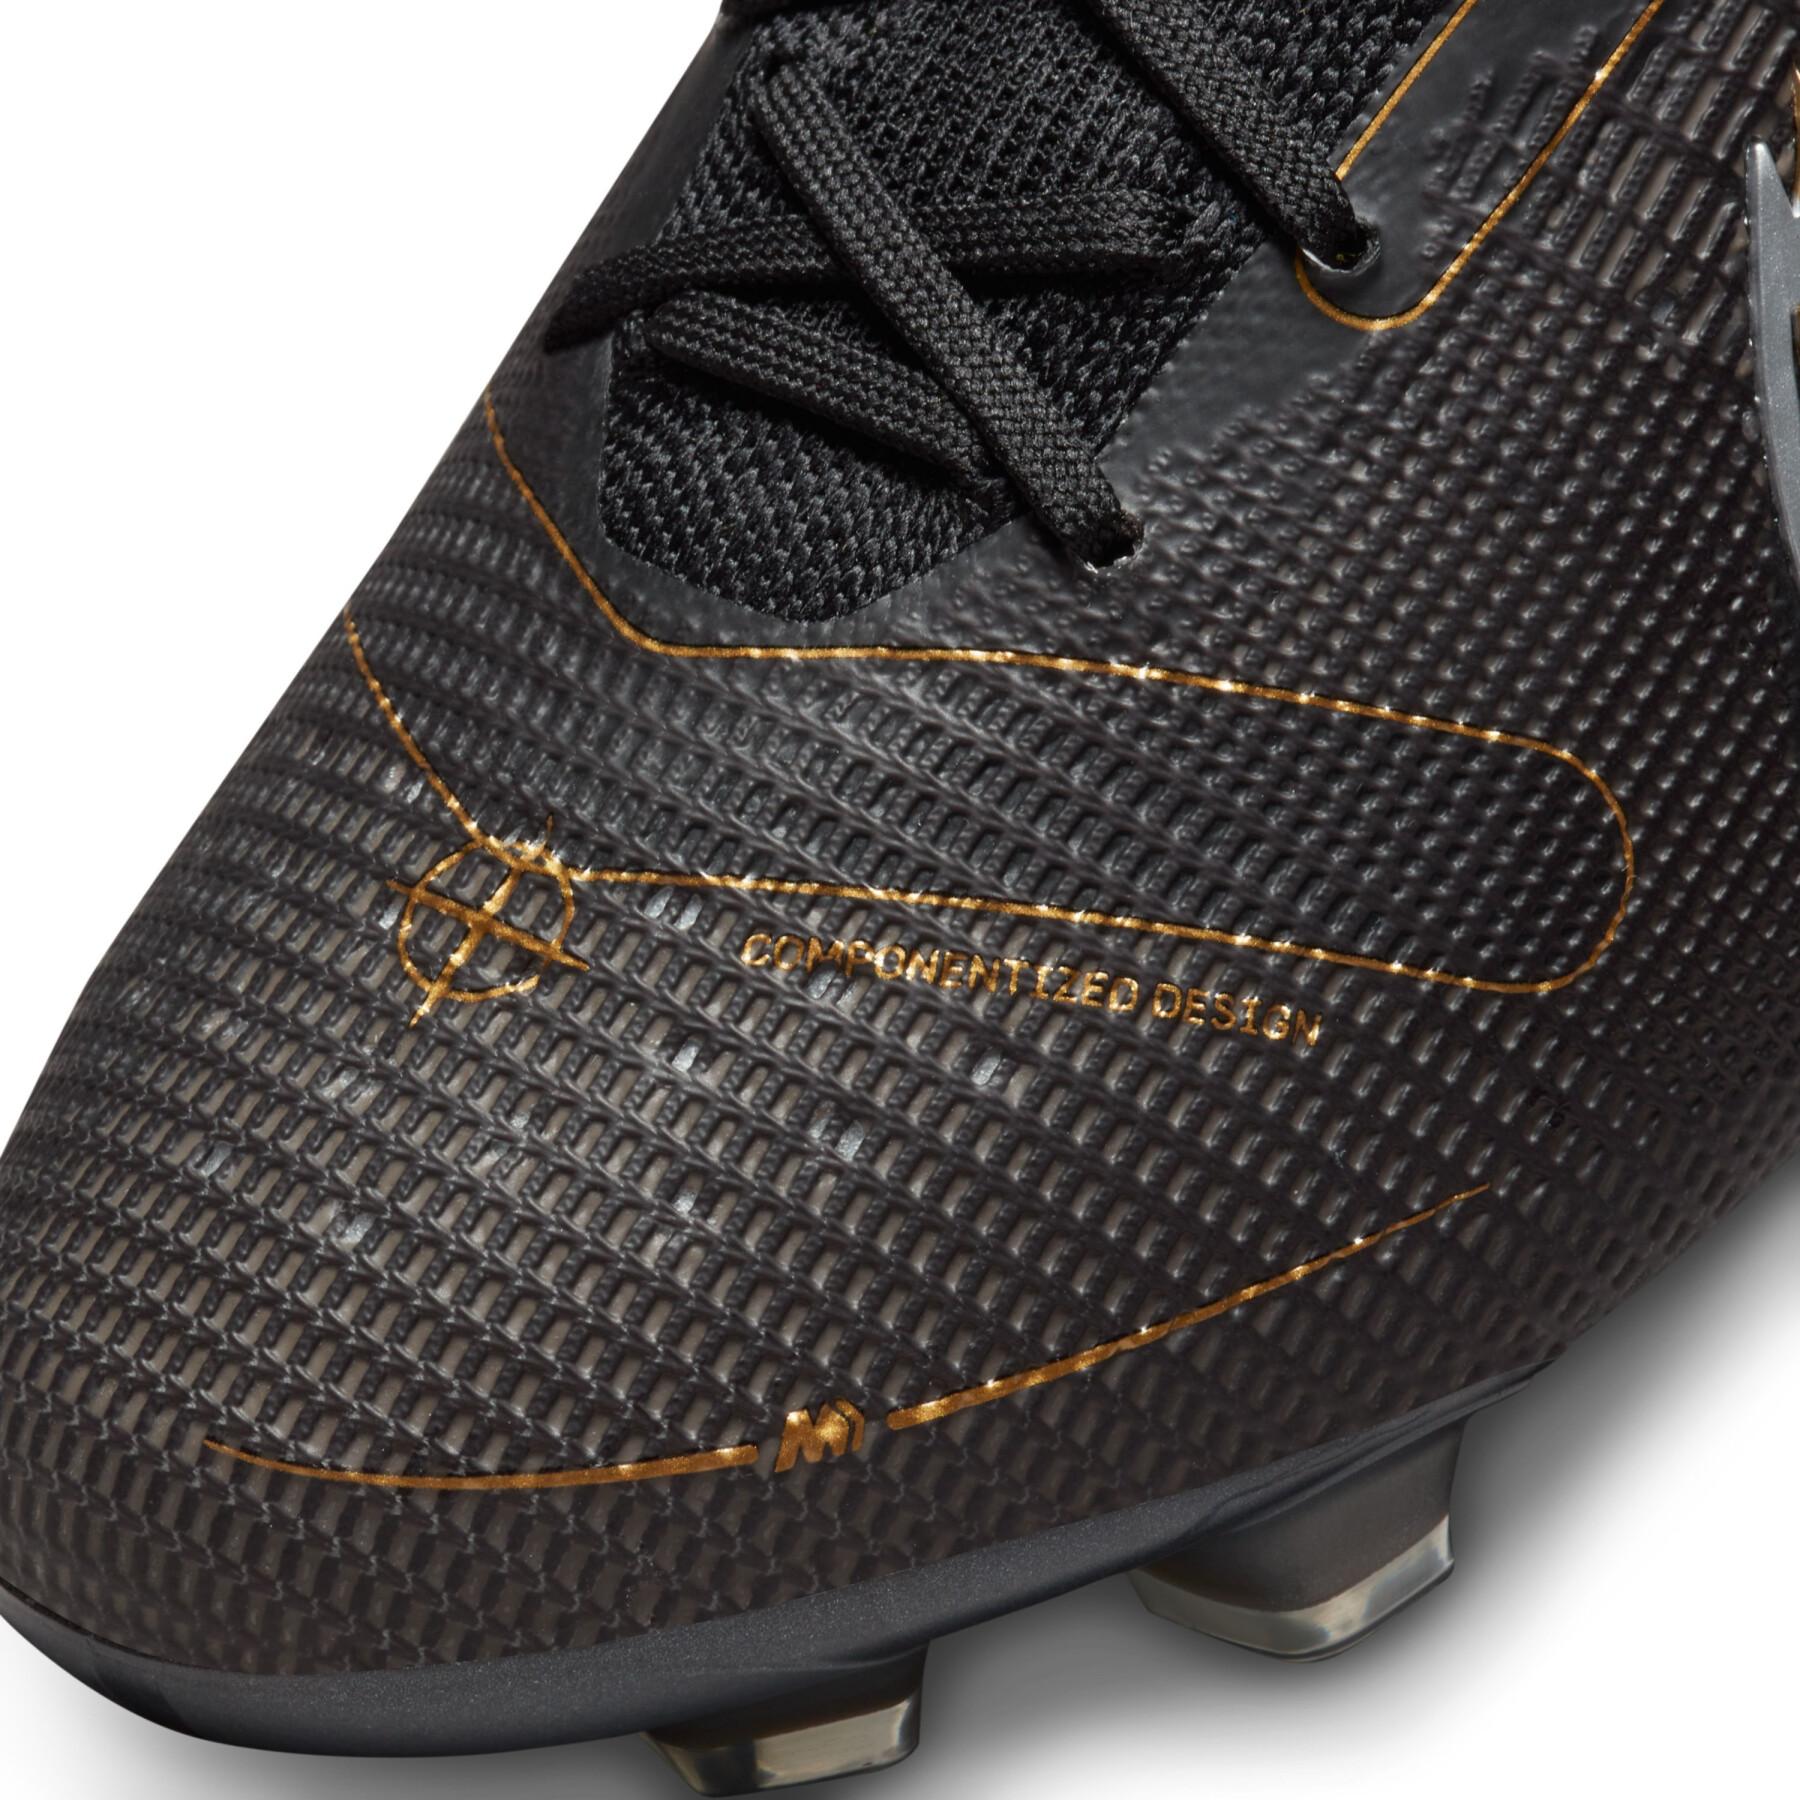 Soccer shoes Nike Mercurial Superfly 8 Élite FG - Shadow pack